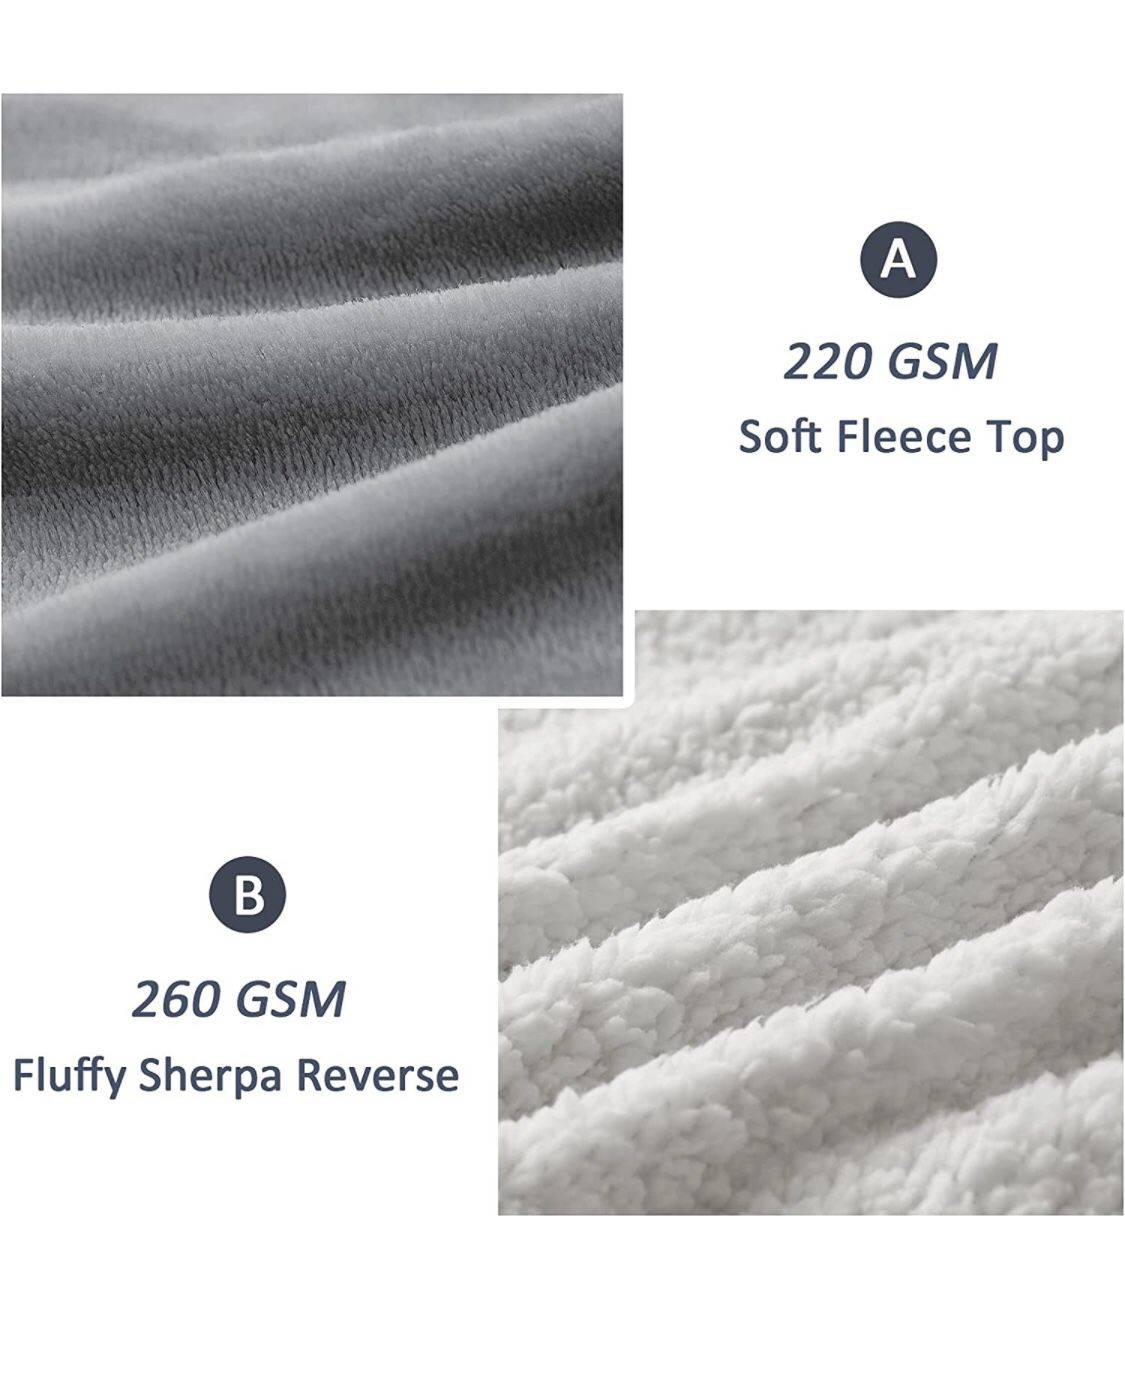 Comaza Sherpa Fleece Throw Blanket - Grey Reversible Thick Blanket Extra Soft Warm & Cozy Microfiber Blanket (50x60 inches)